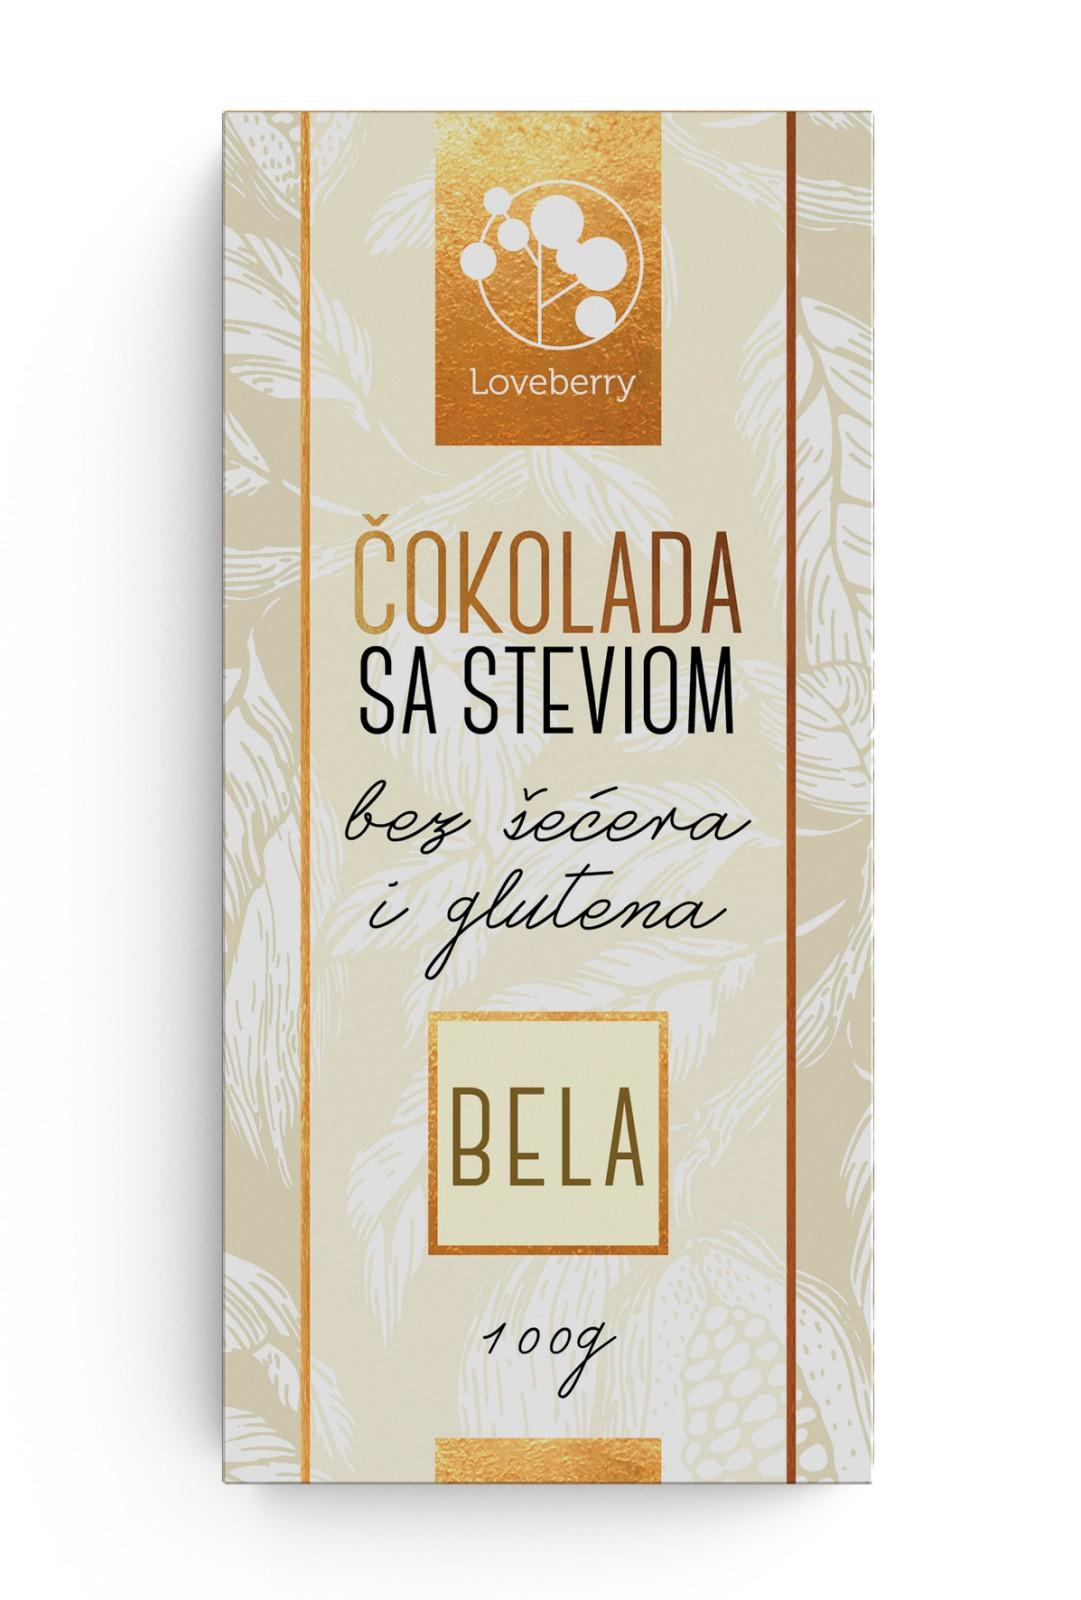 Selected image for Loveberry Bela čokolada sa steviom stevia 100g